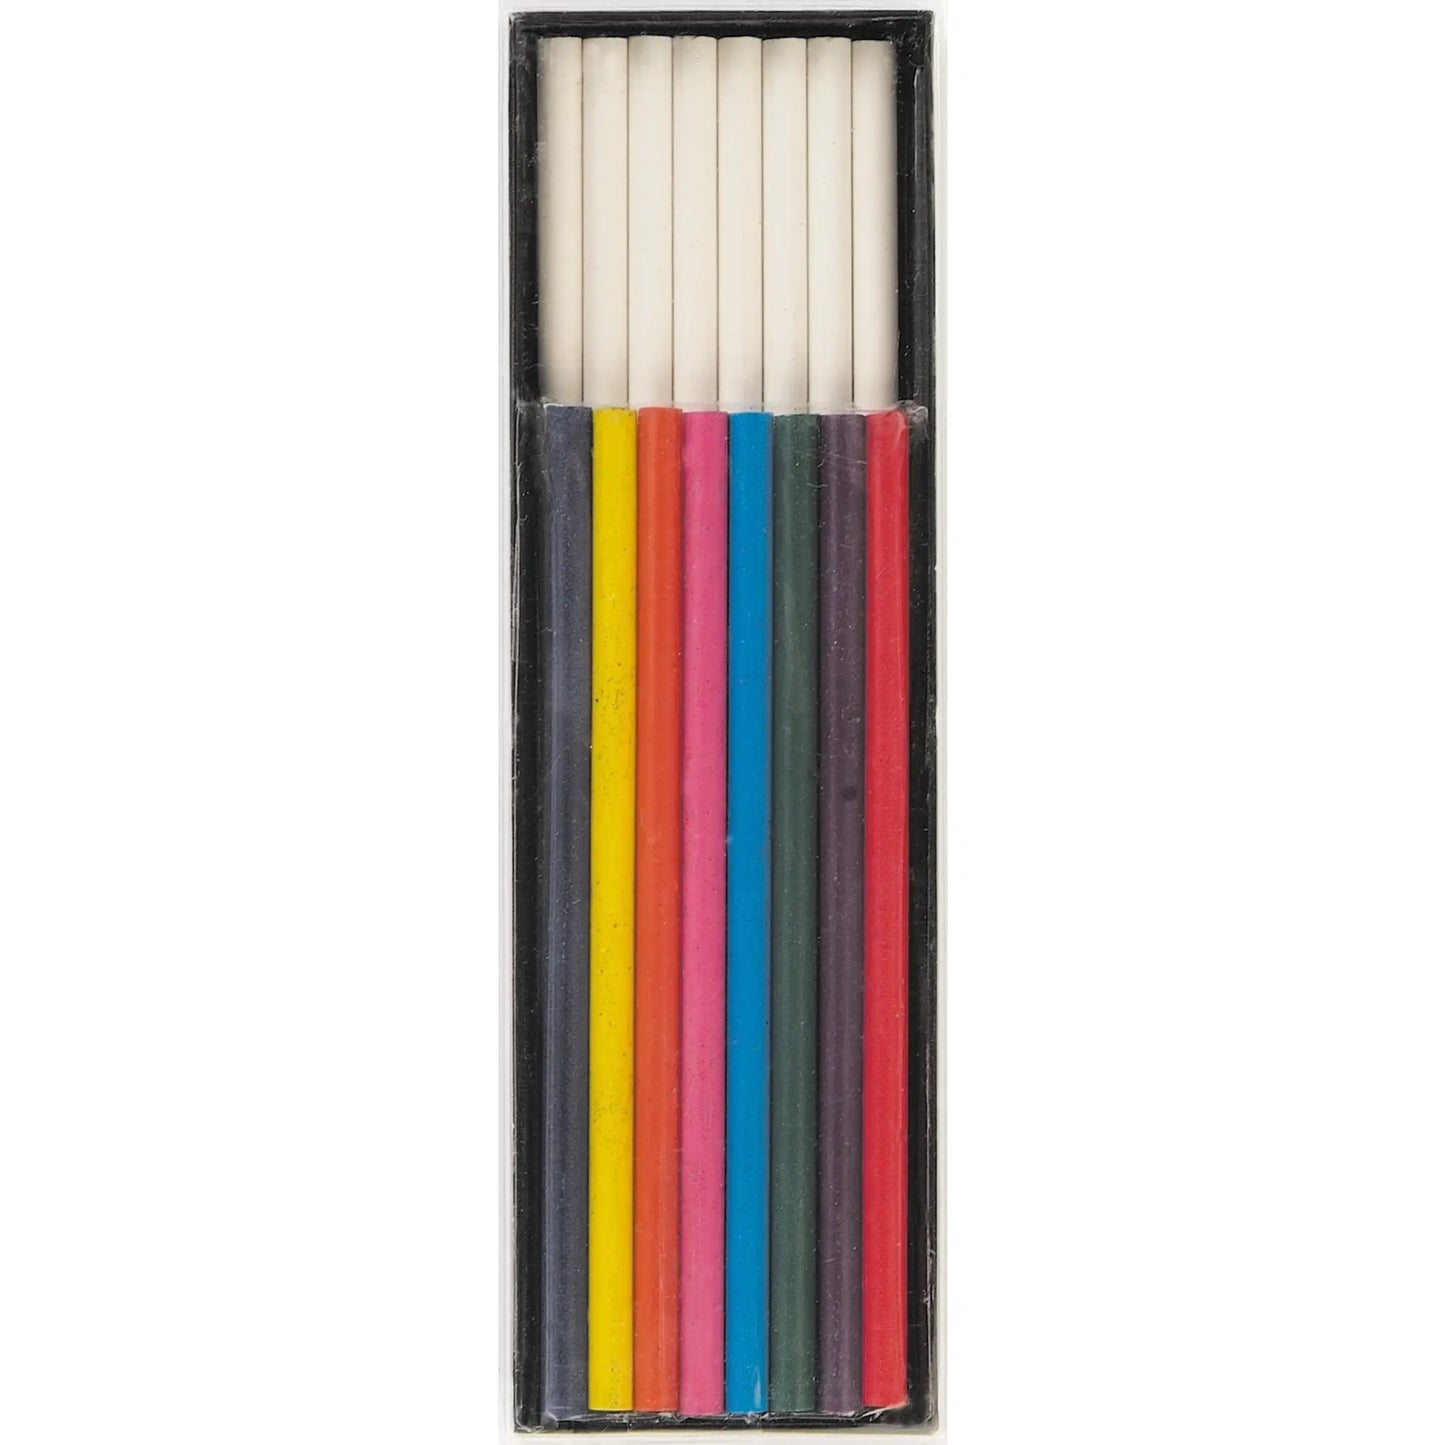 Prym Cartridge Pencil Set